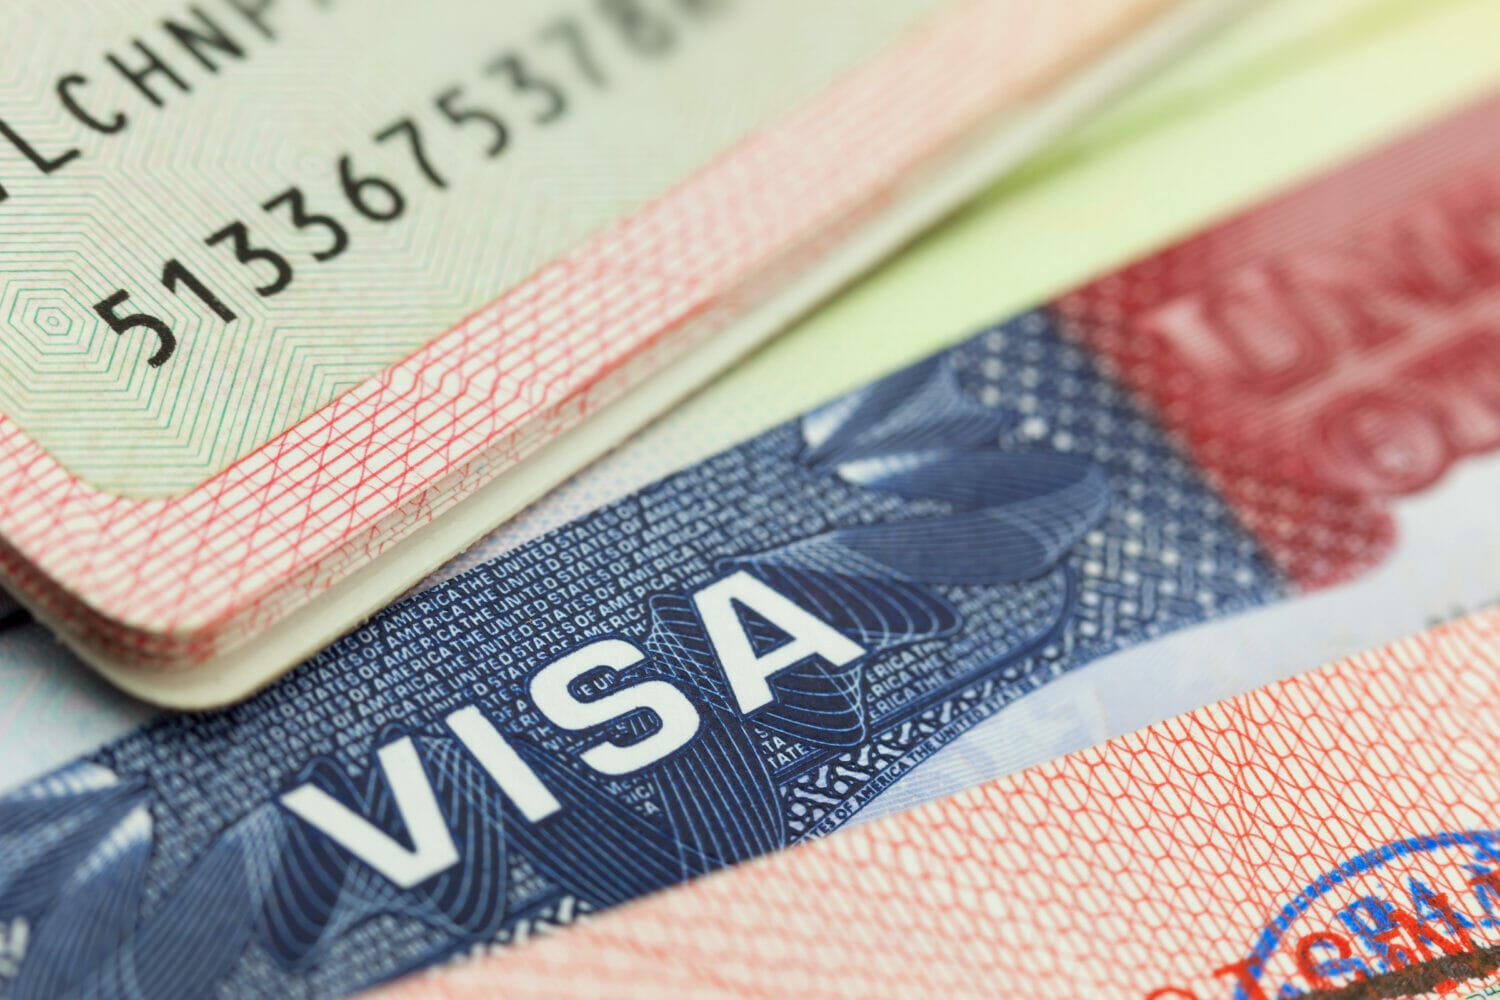 U.S. Travel Visa Information & Resources